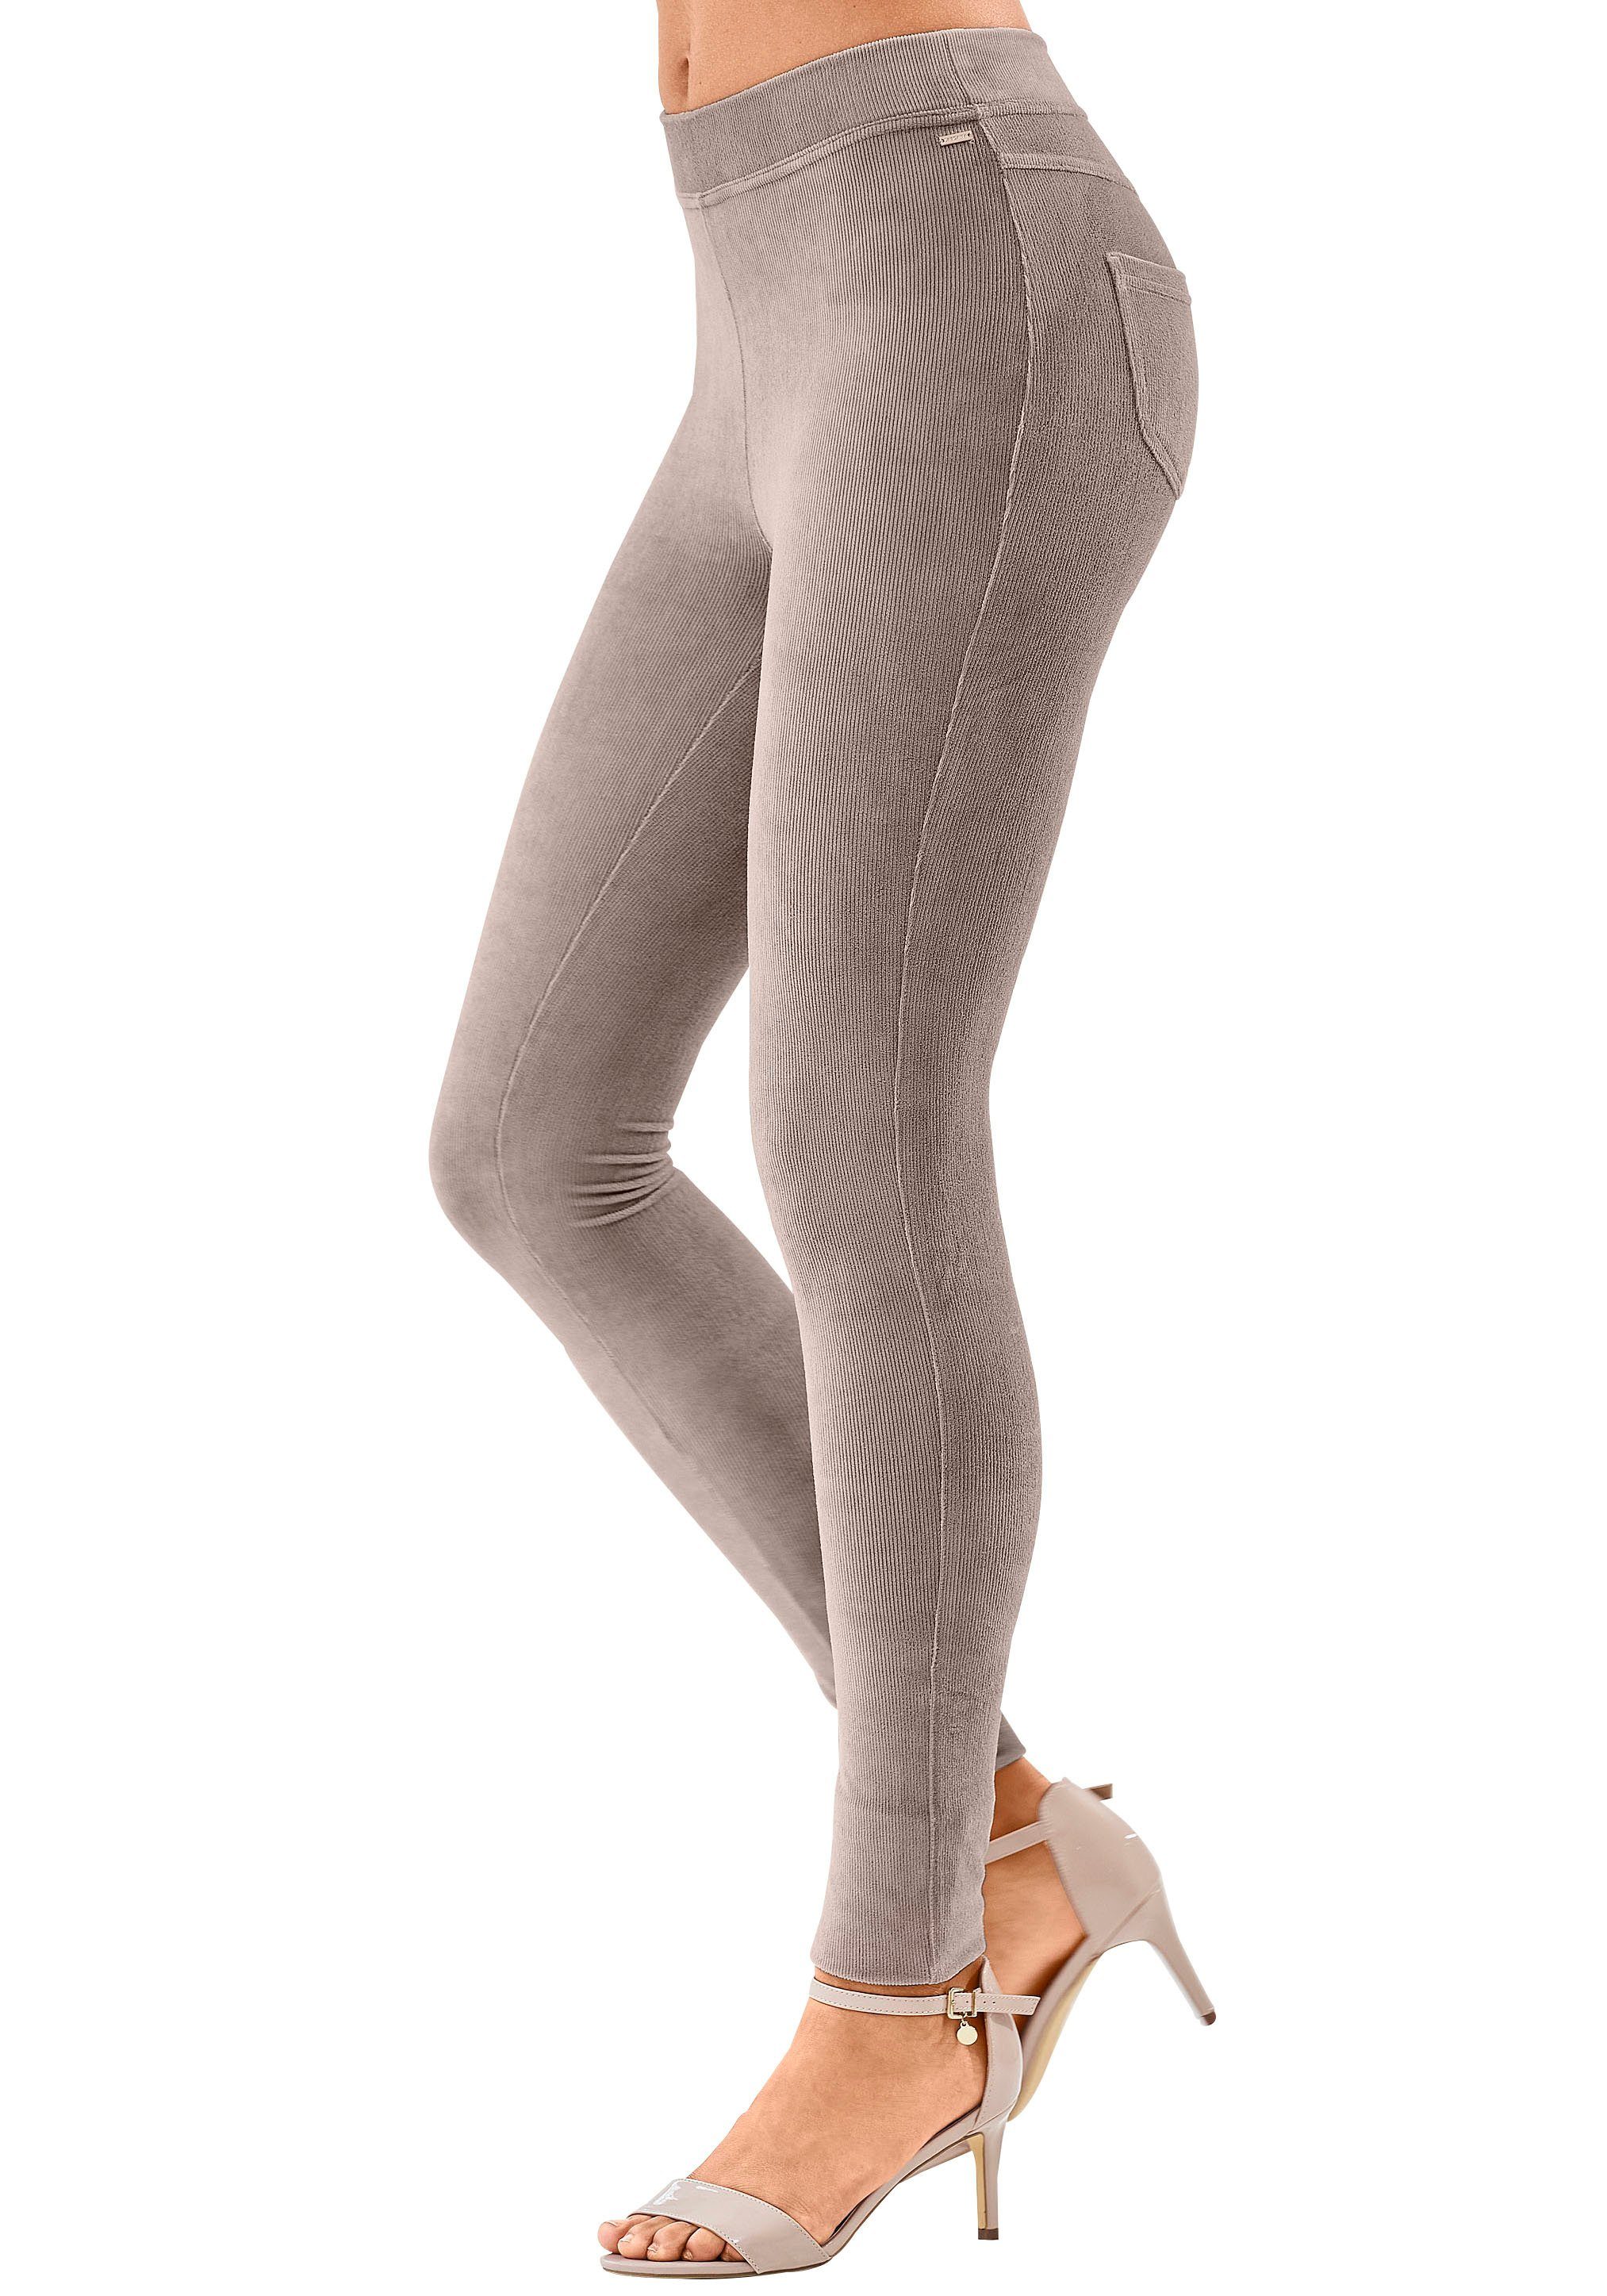 LASCANA Leggings aus weichem Material in Cord-Optik, Loungewear beige | Stretchhosen